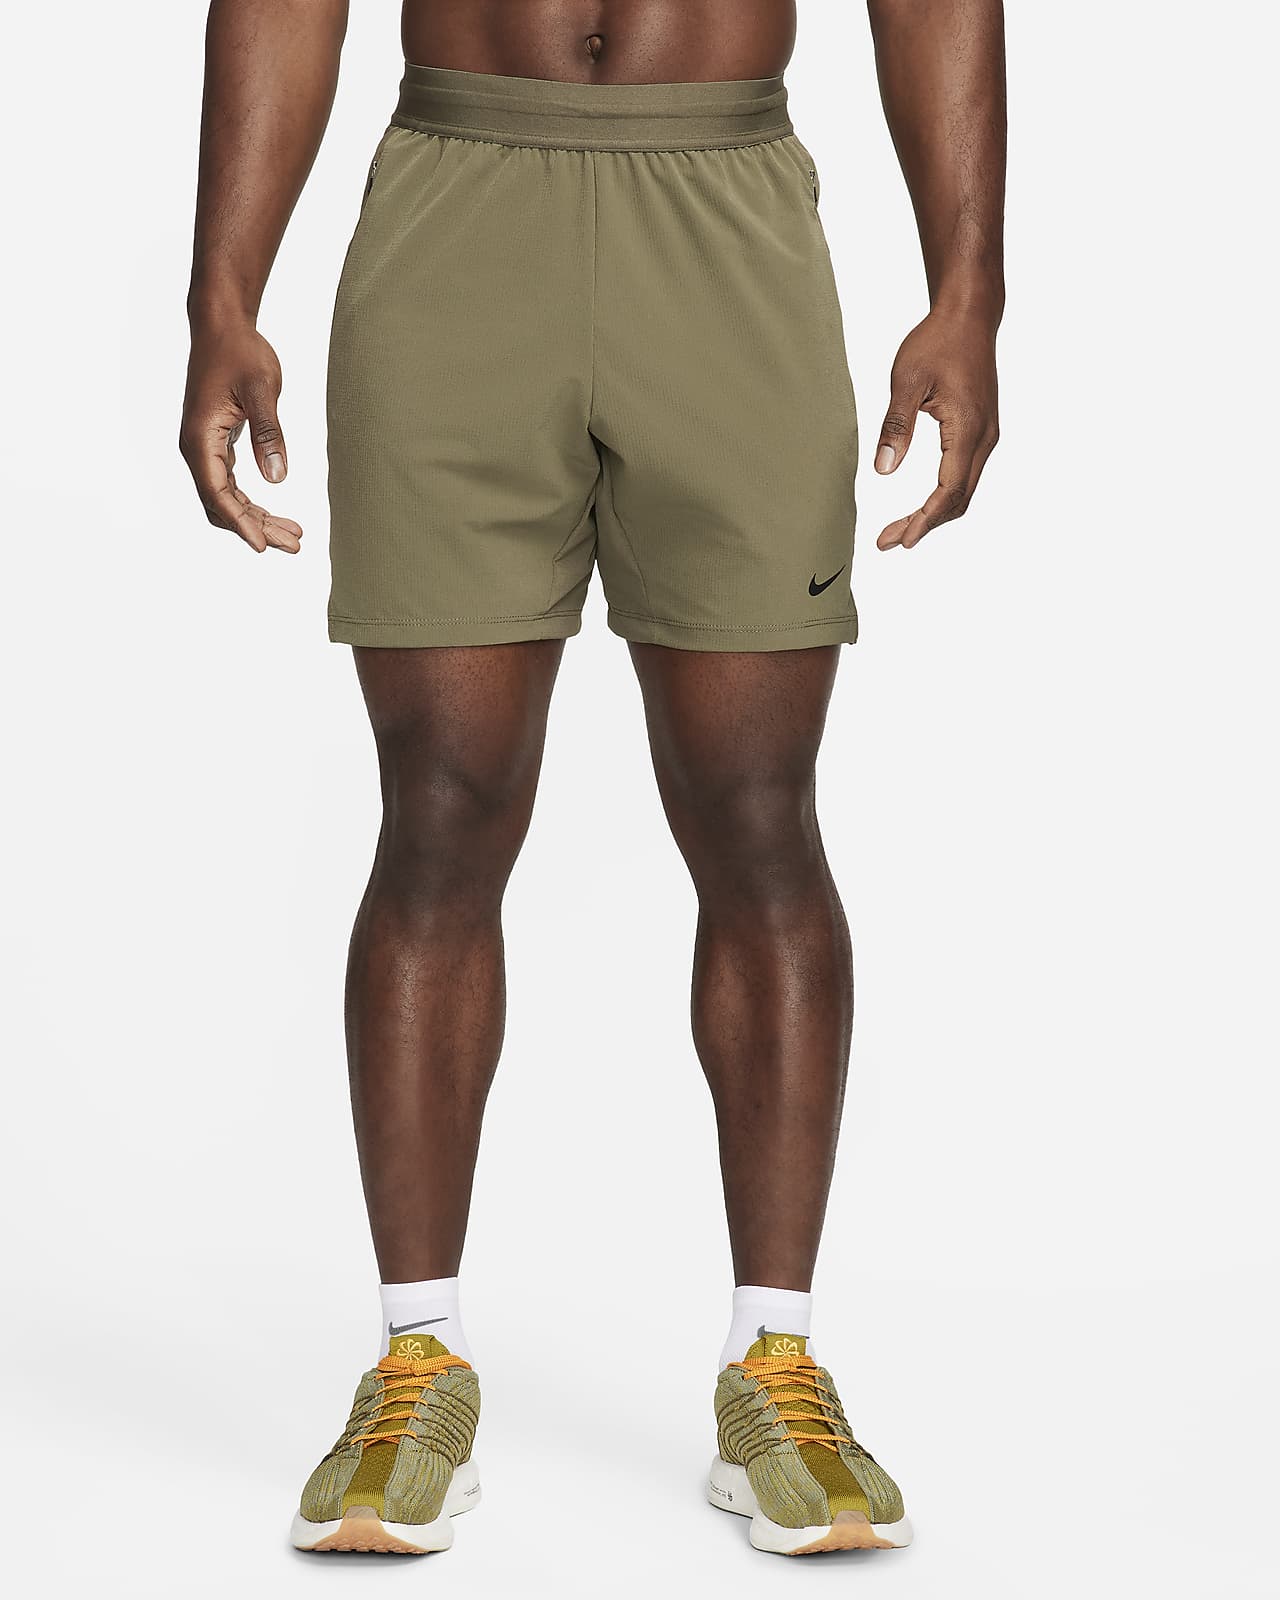 Nike Pro Training Flex 6 inch shorts in black